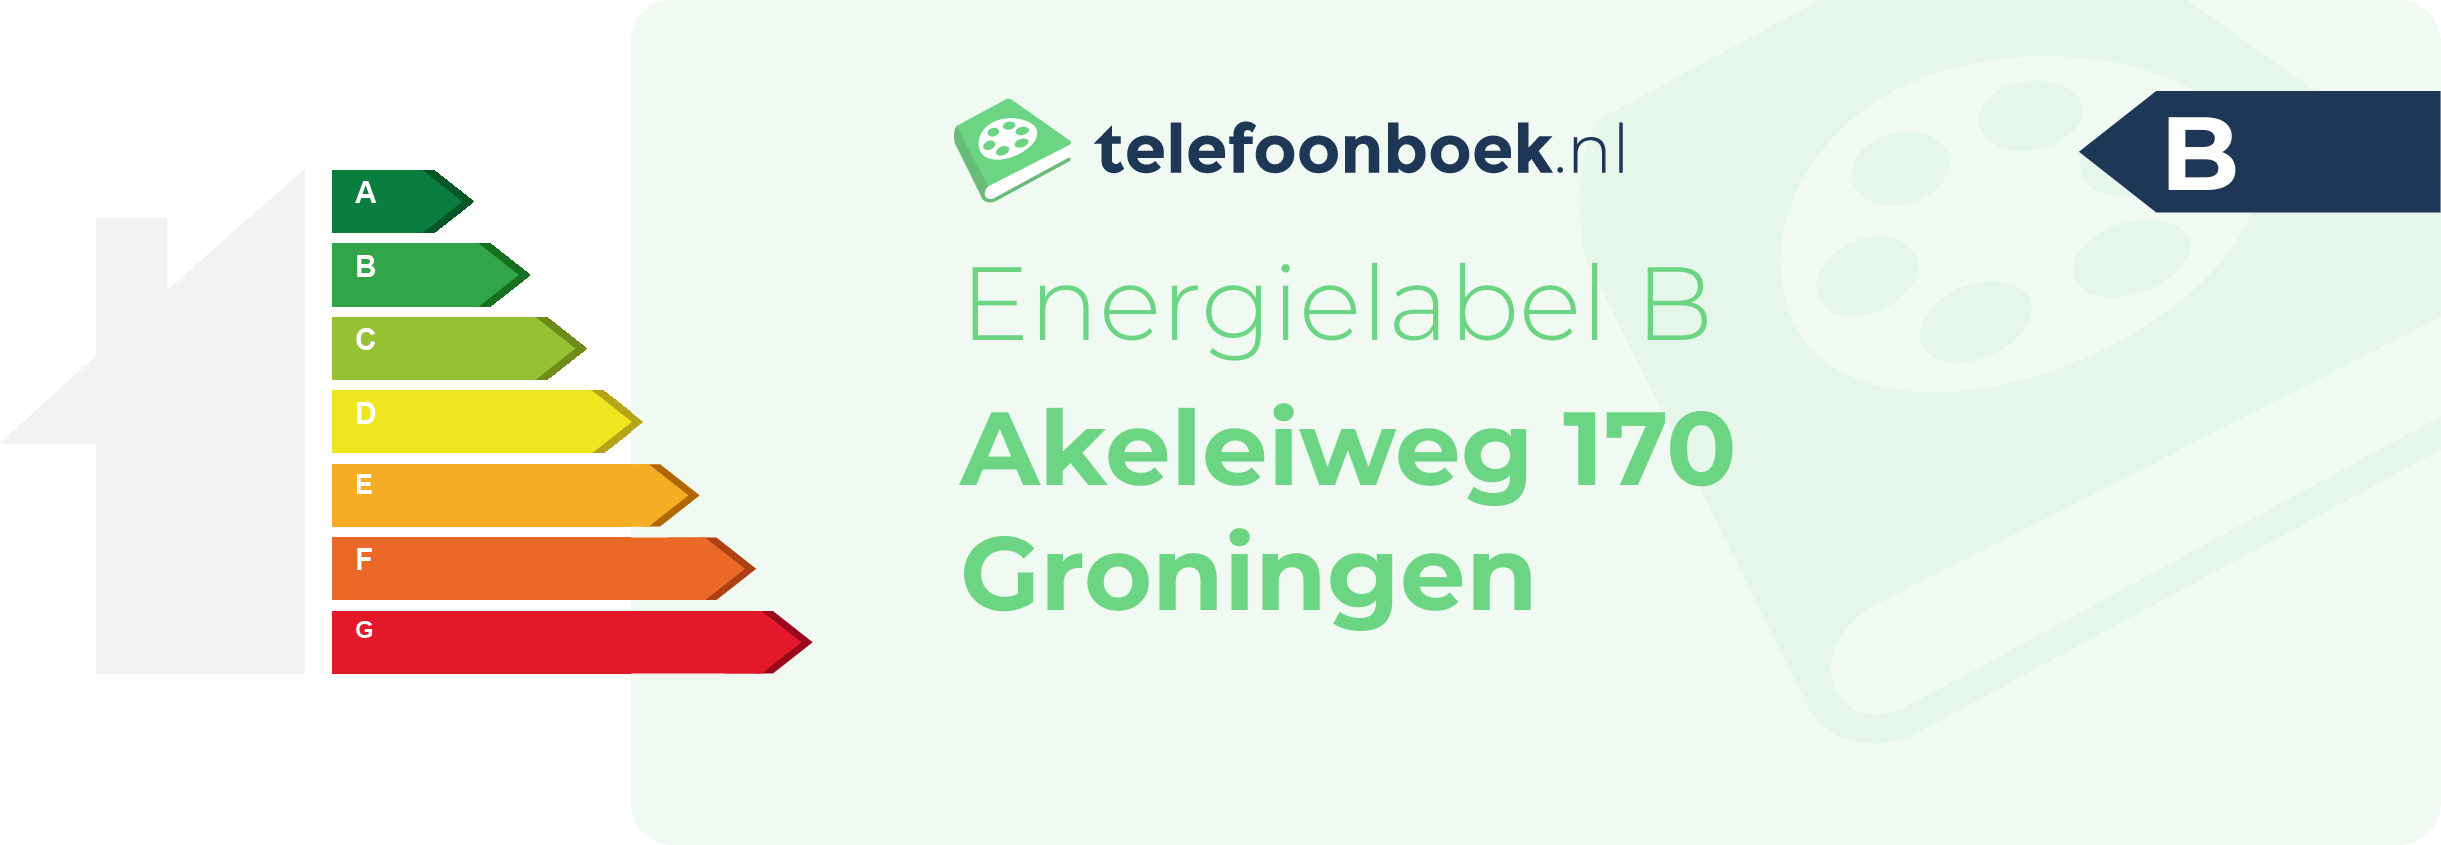 Energielabel Akeleiweg 170 Groningen